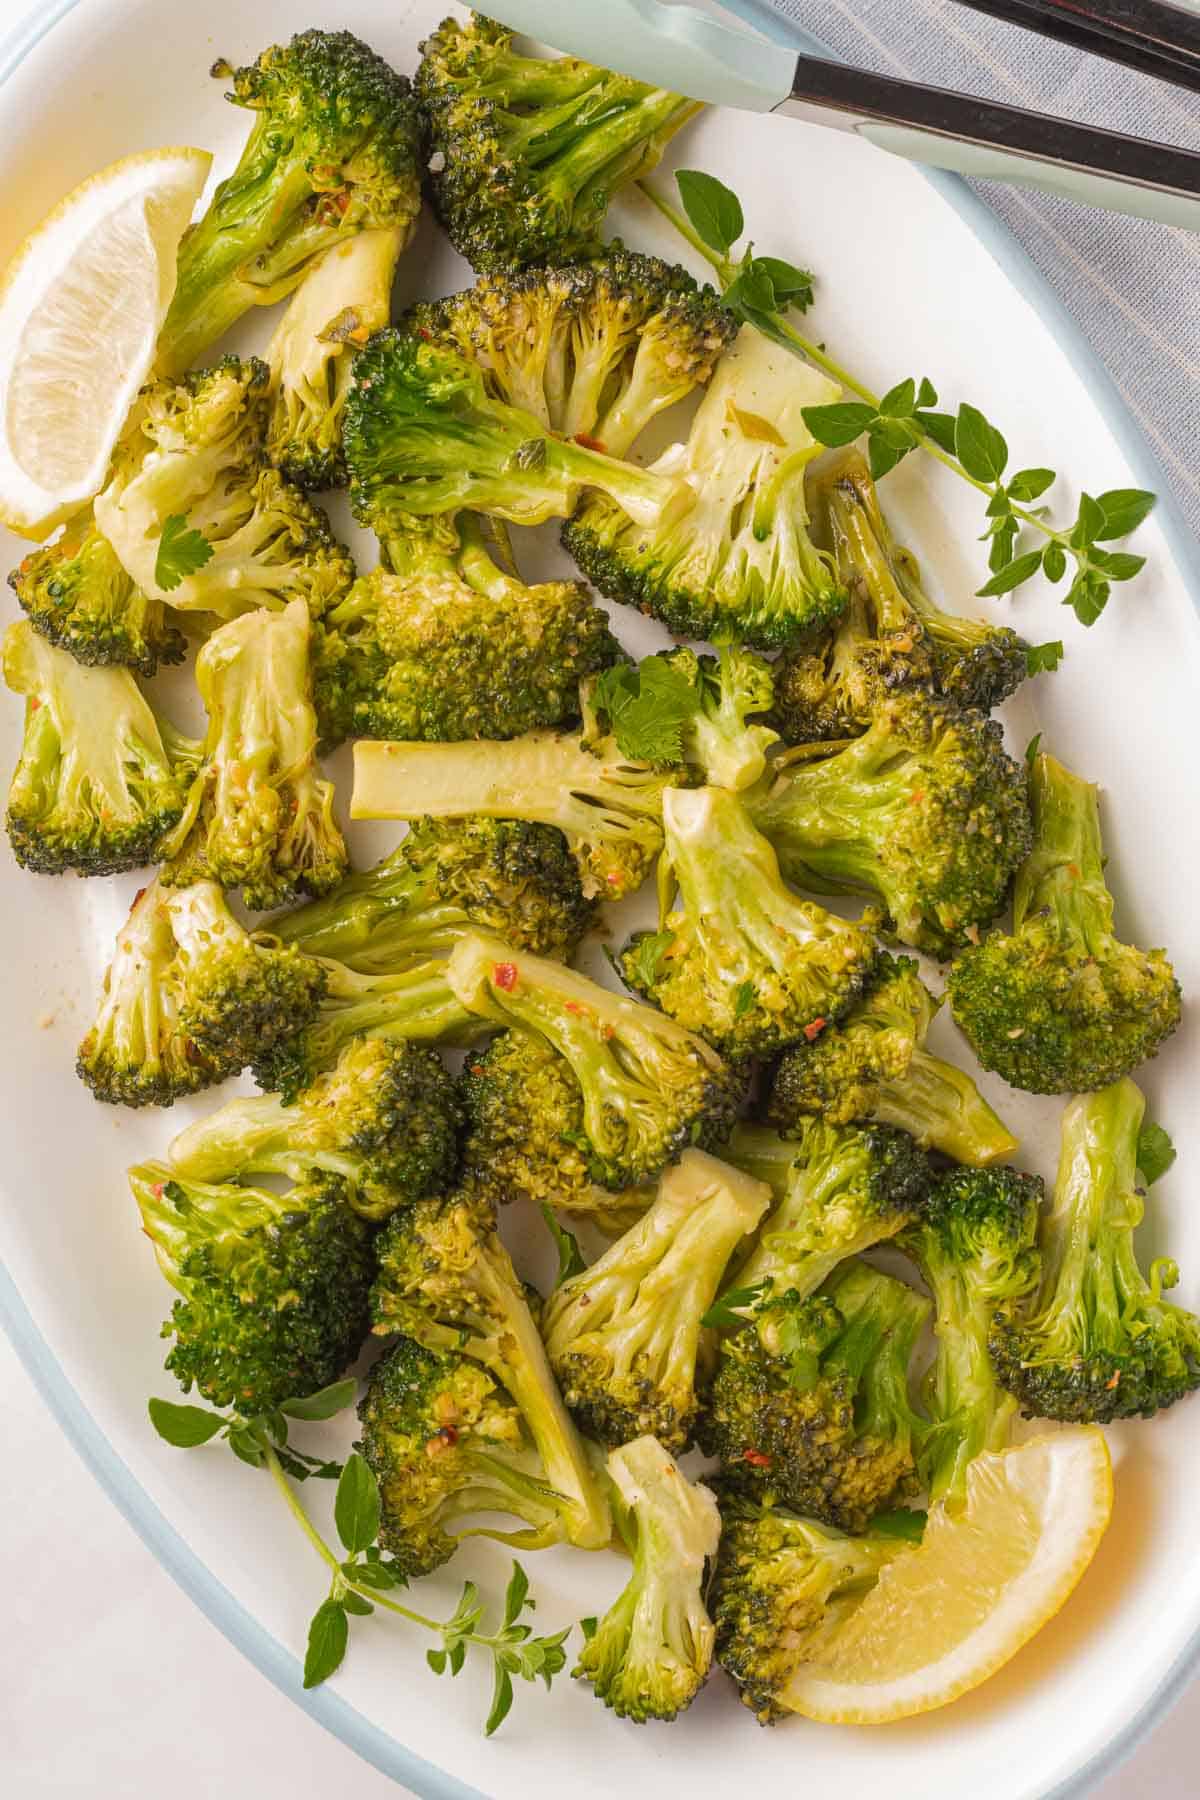 Marinated broccoli and lemon on white platter.